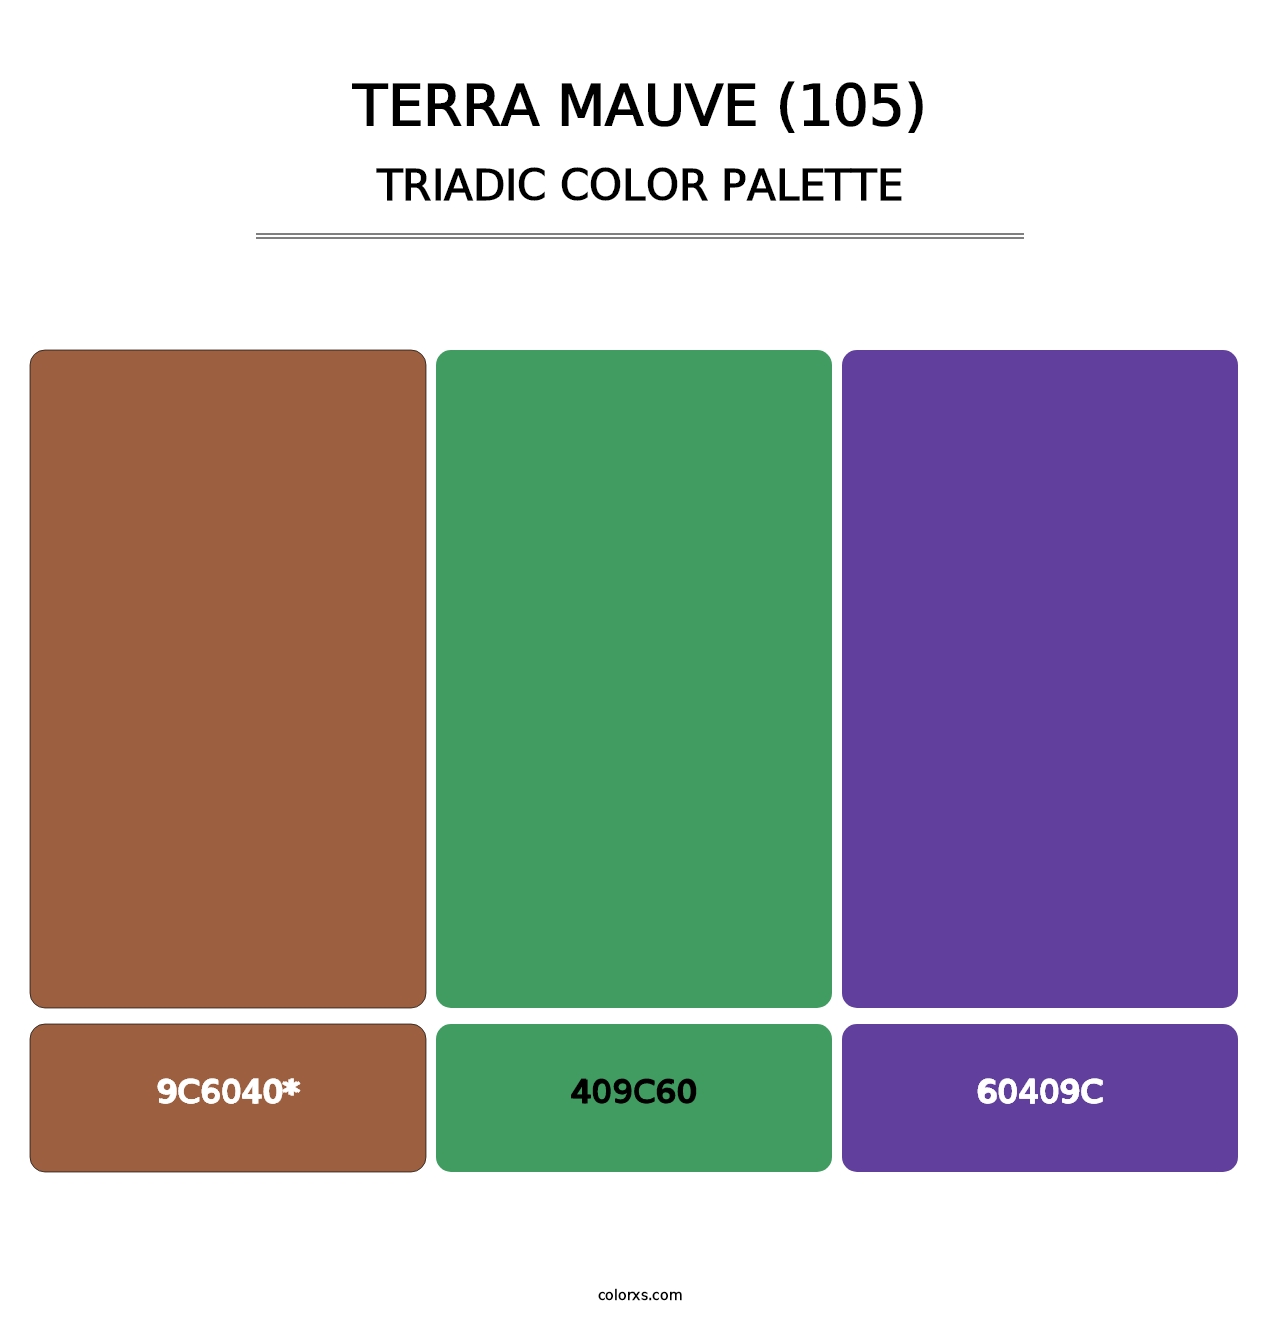 Terra Mauve (105) - Triadic Color Palette